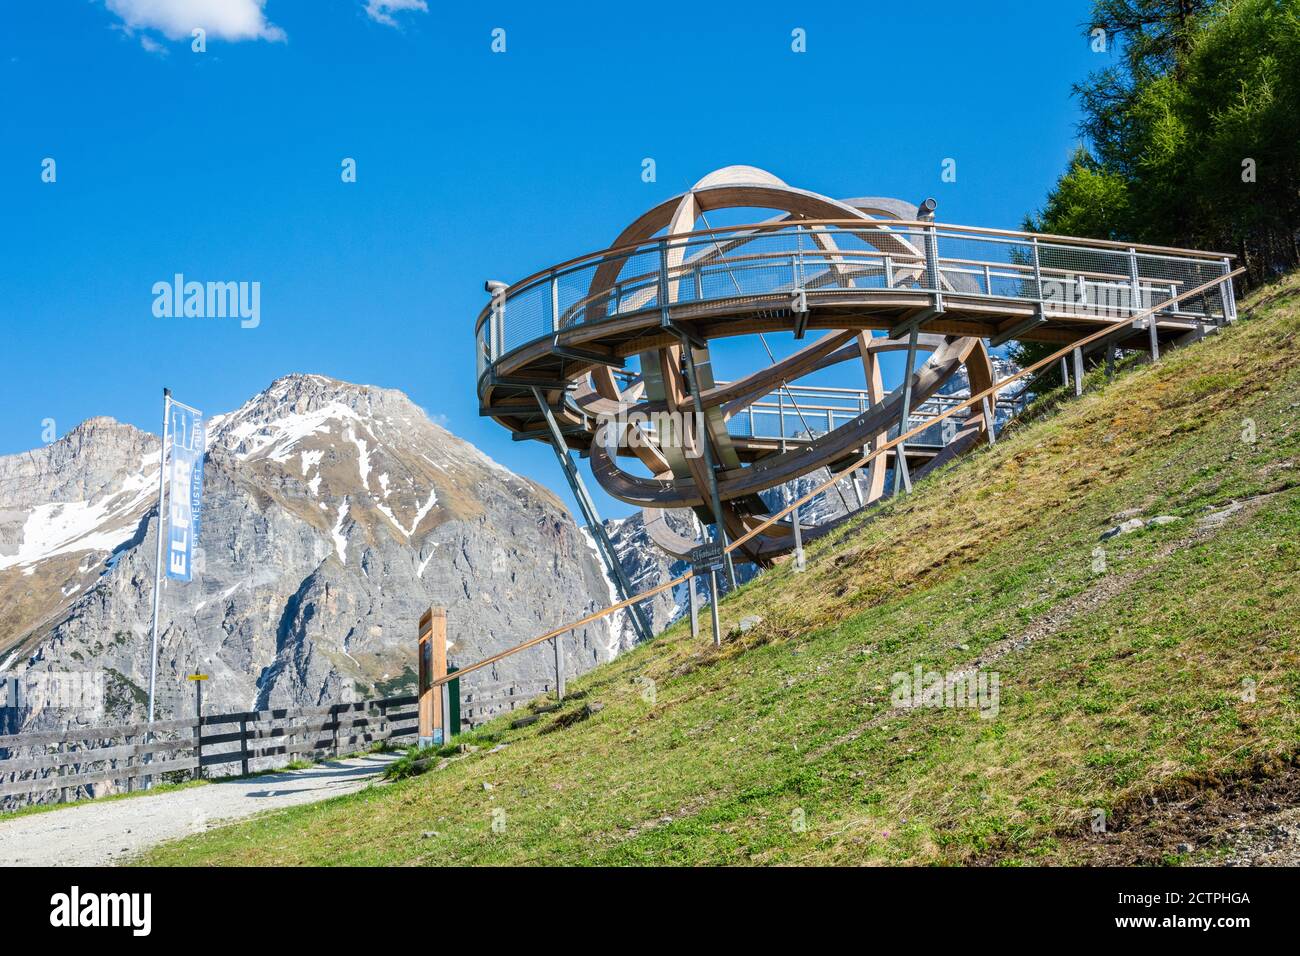 Neustift im Stubaital, Austria – May 28, 2017. Wooden walk-in sundial at Mountain station of Panoramabahn Elfer cable car in Stubaital valley in Tirol Stock Photo